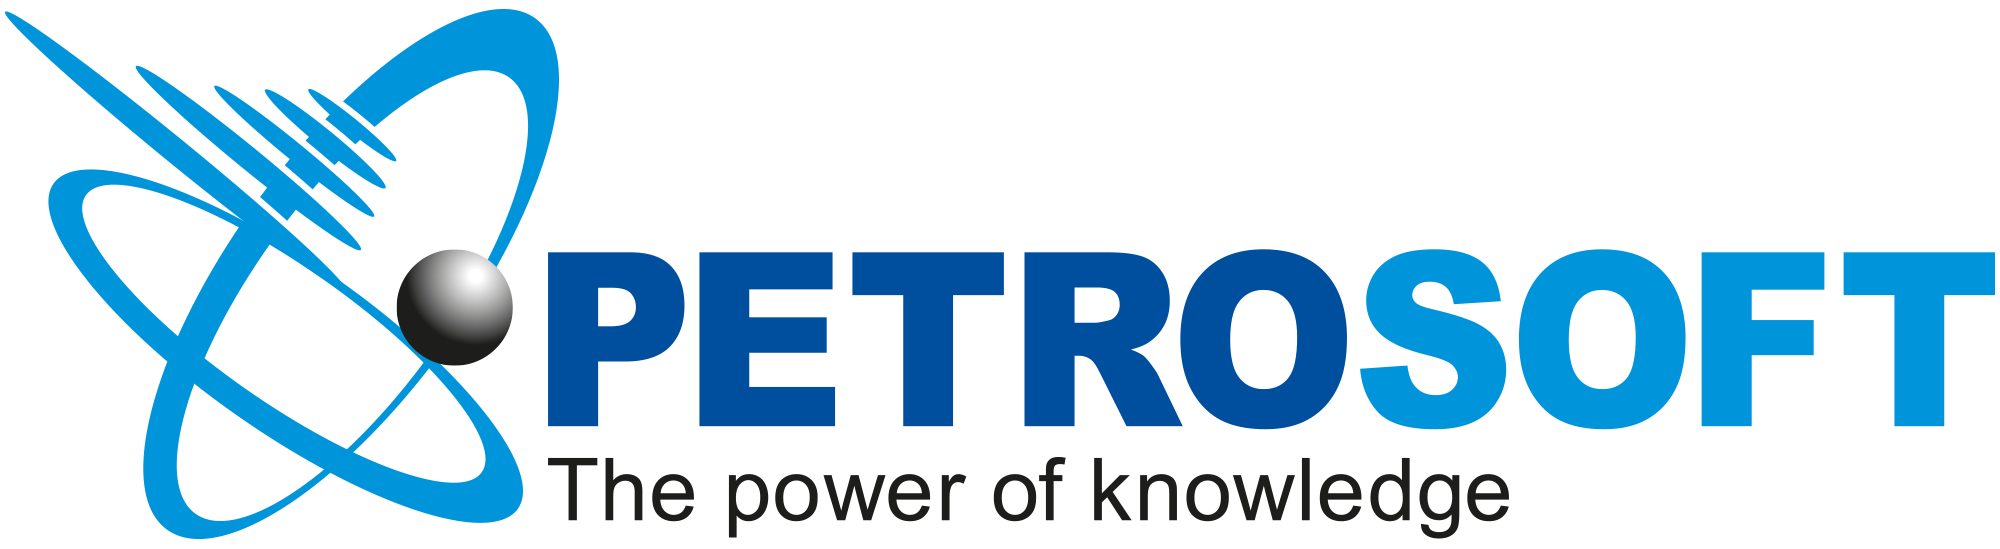 startup marketing agency Petrosoft Logo 2 color 1